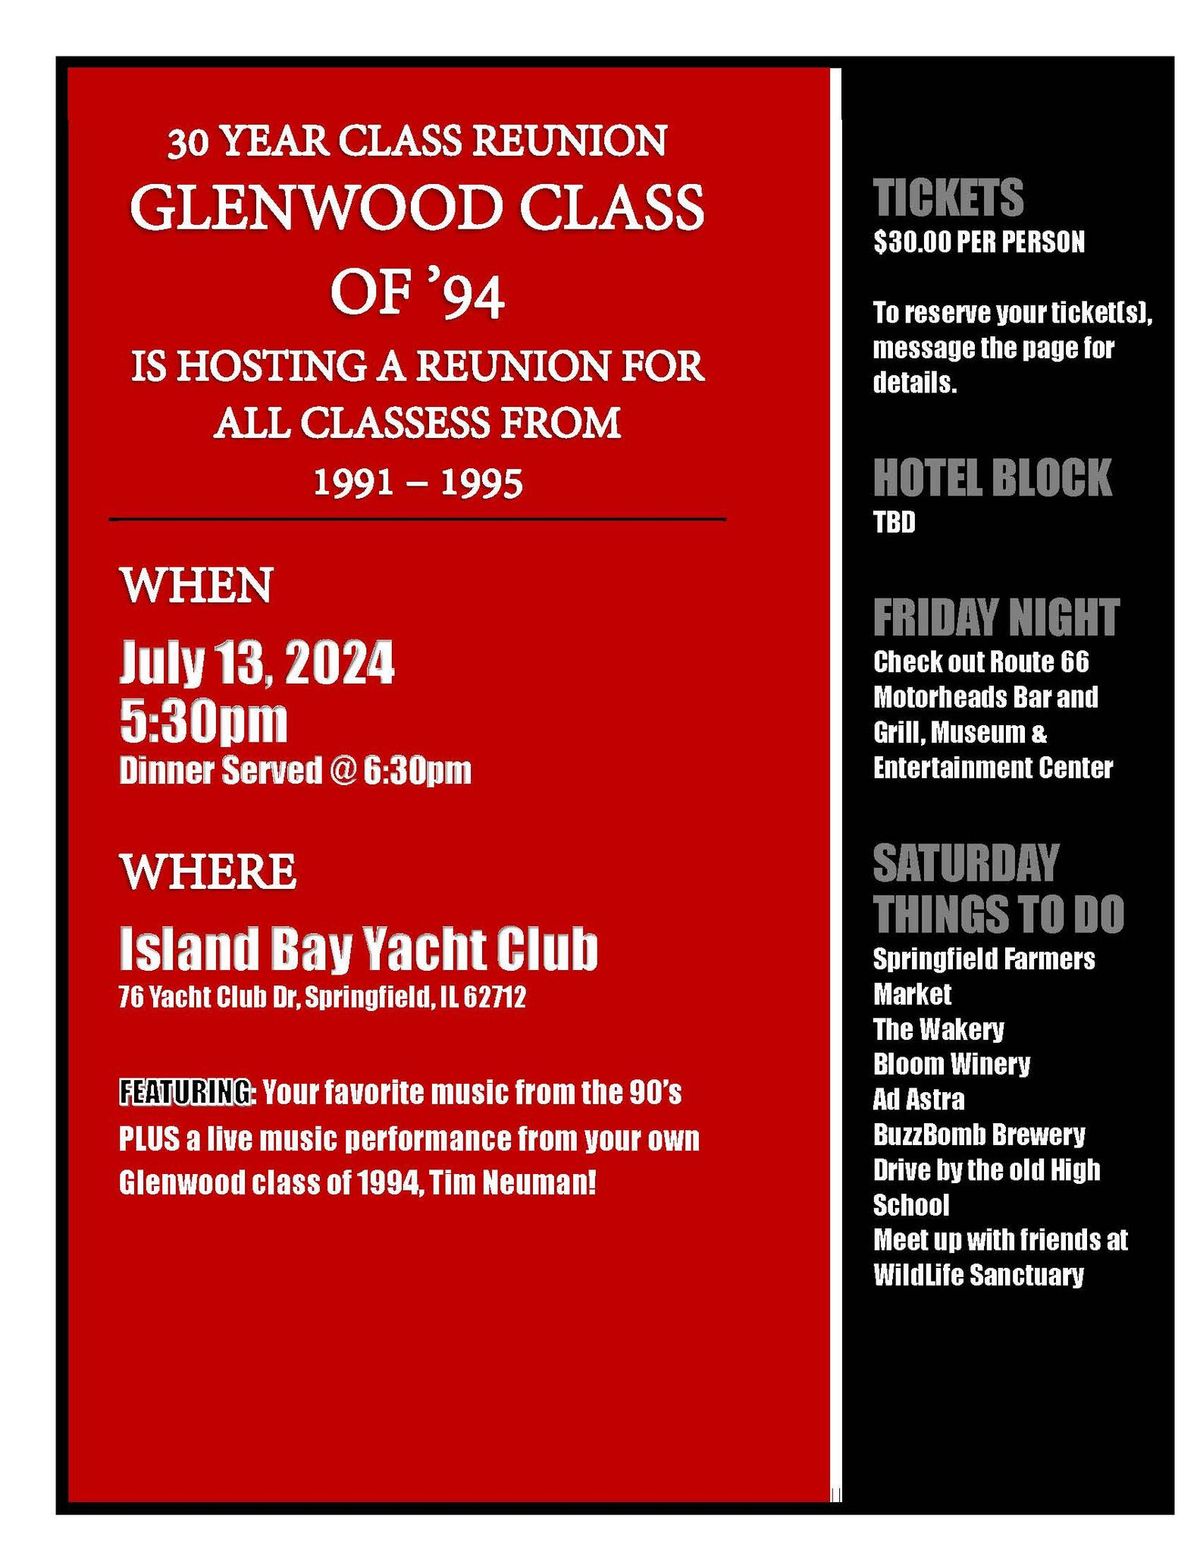 Glenwood Classes of 1991 - 1995 Reunion